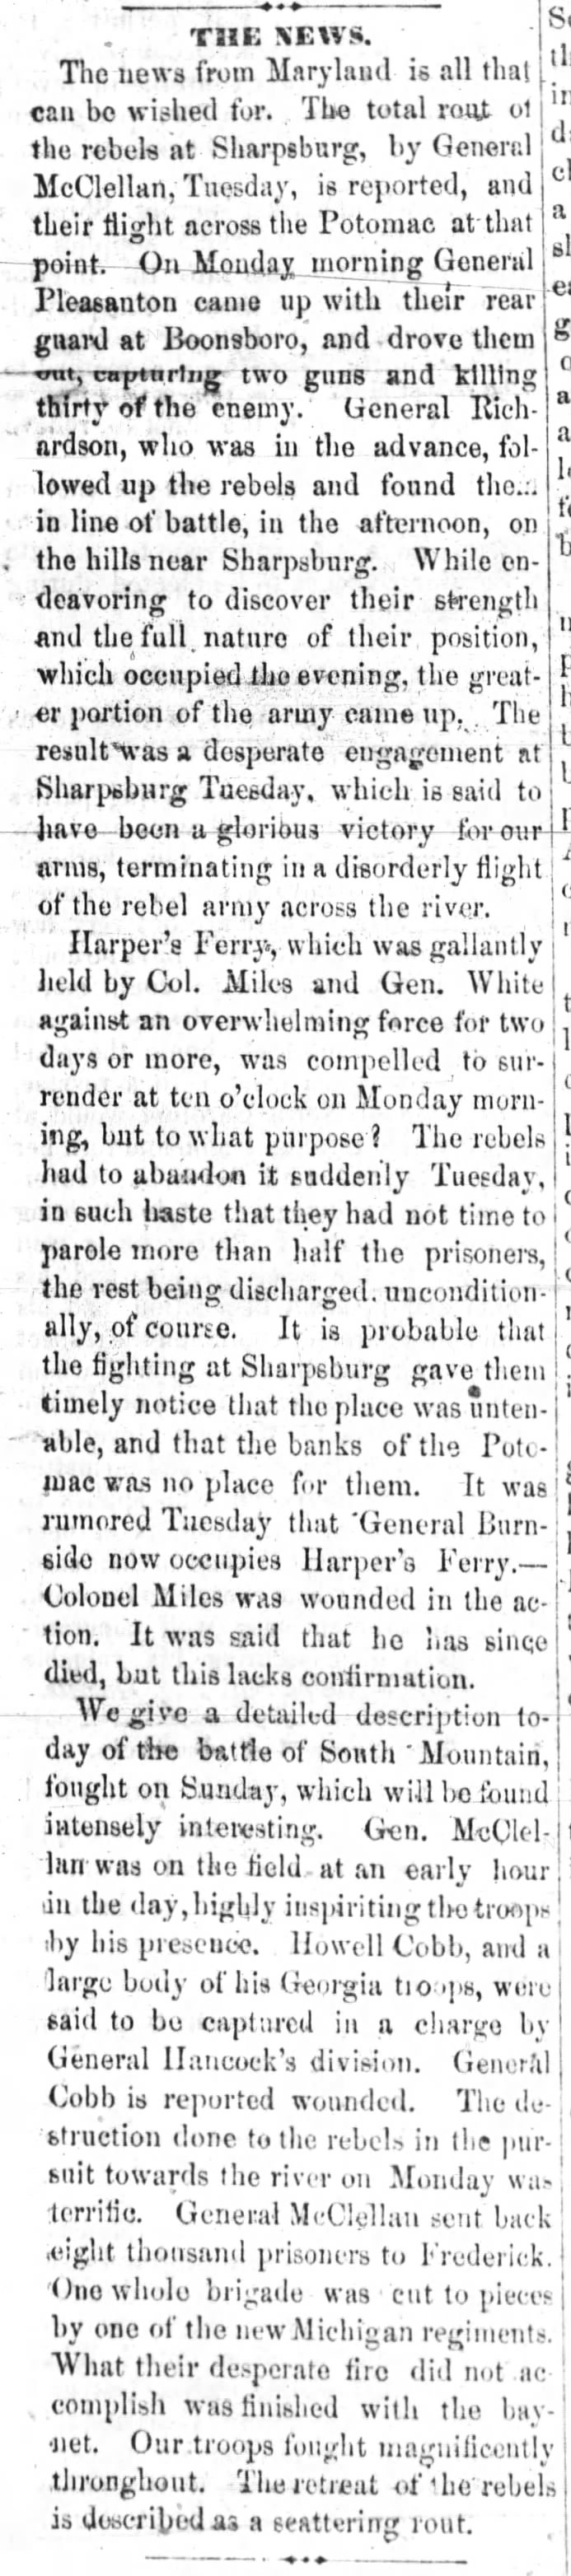 Pro-Union Southern paper reports on Antietam